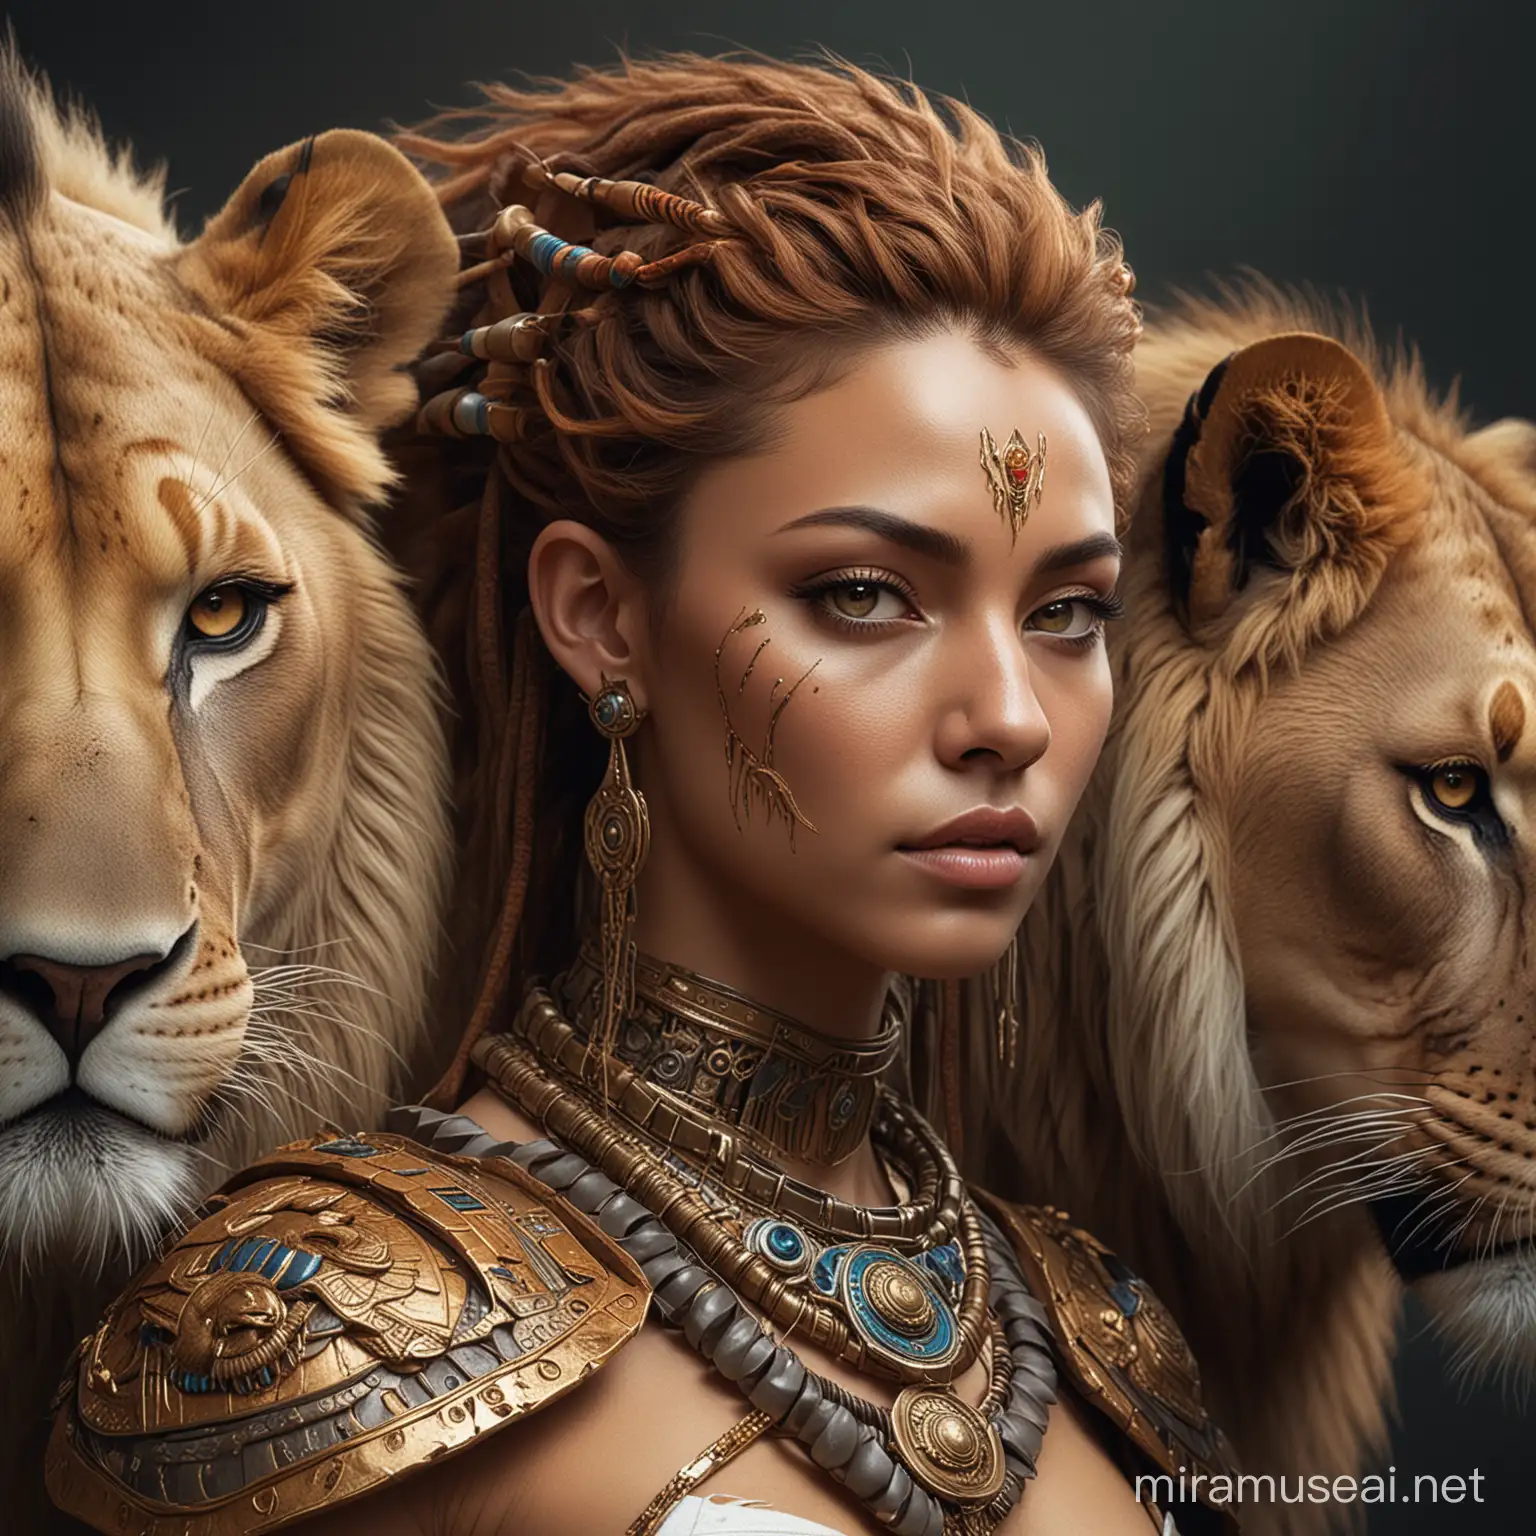 Digital Fantasy Art Lioness Empress Hybrid in Tribal Cyberpunk Regalia